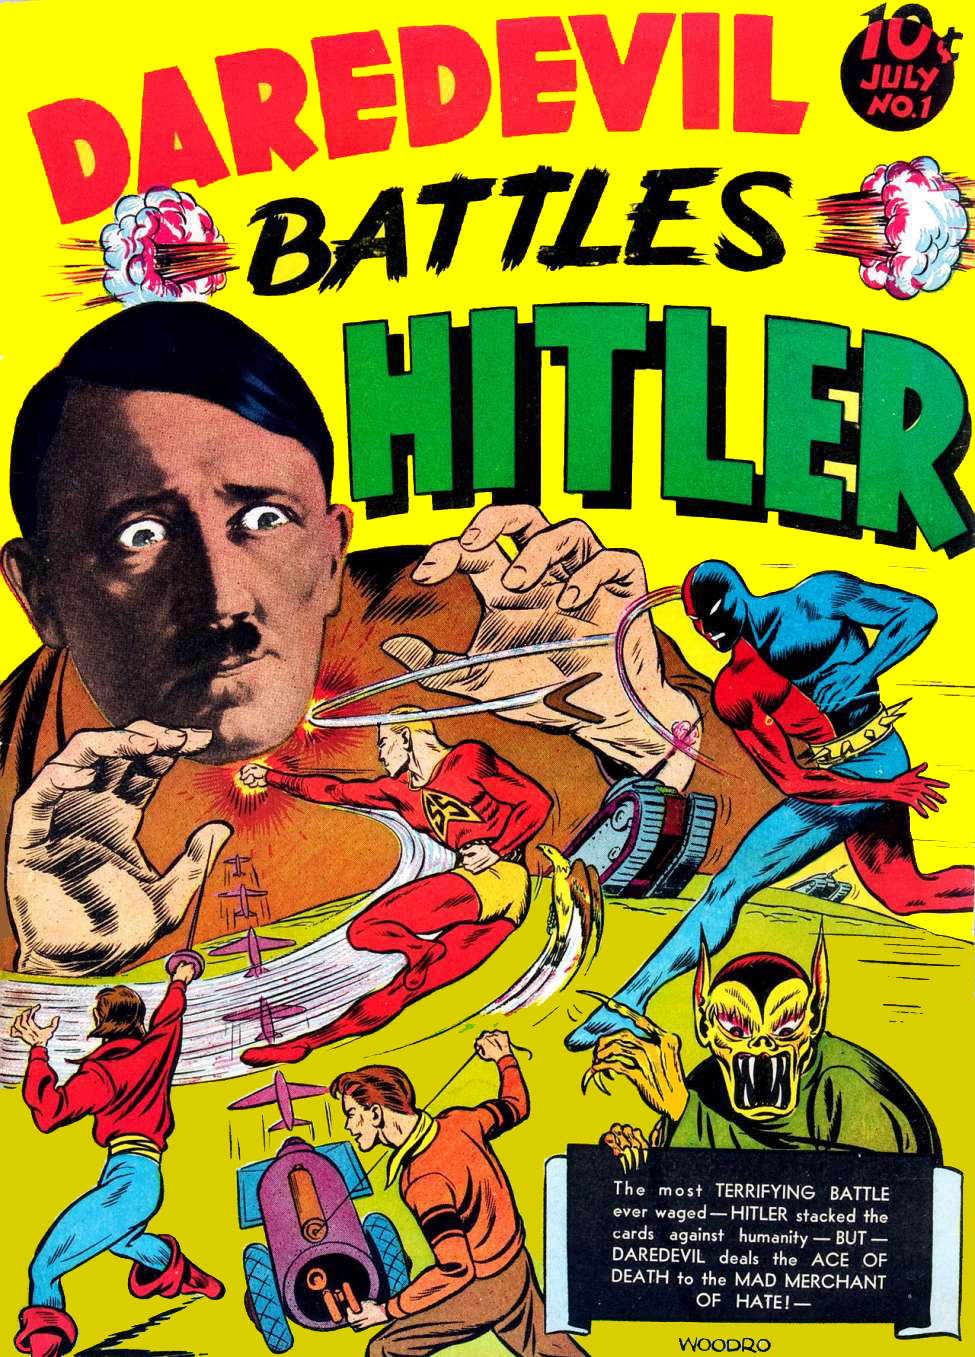 Comic Book Cover, 1941